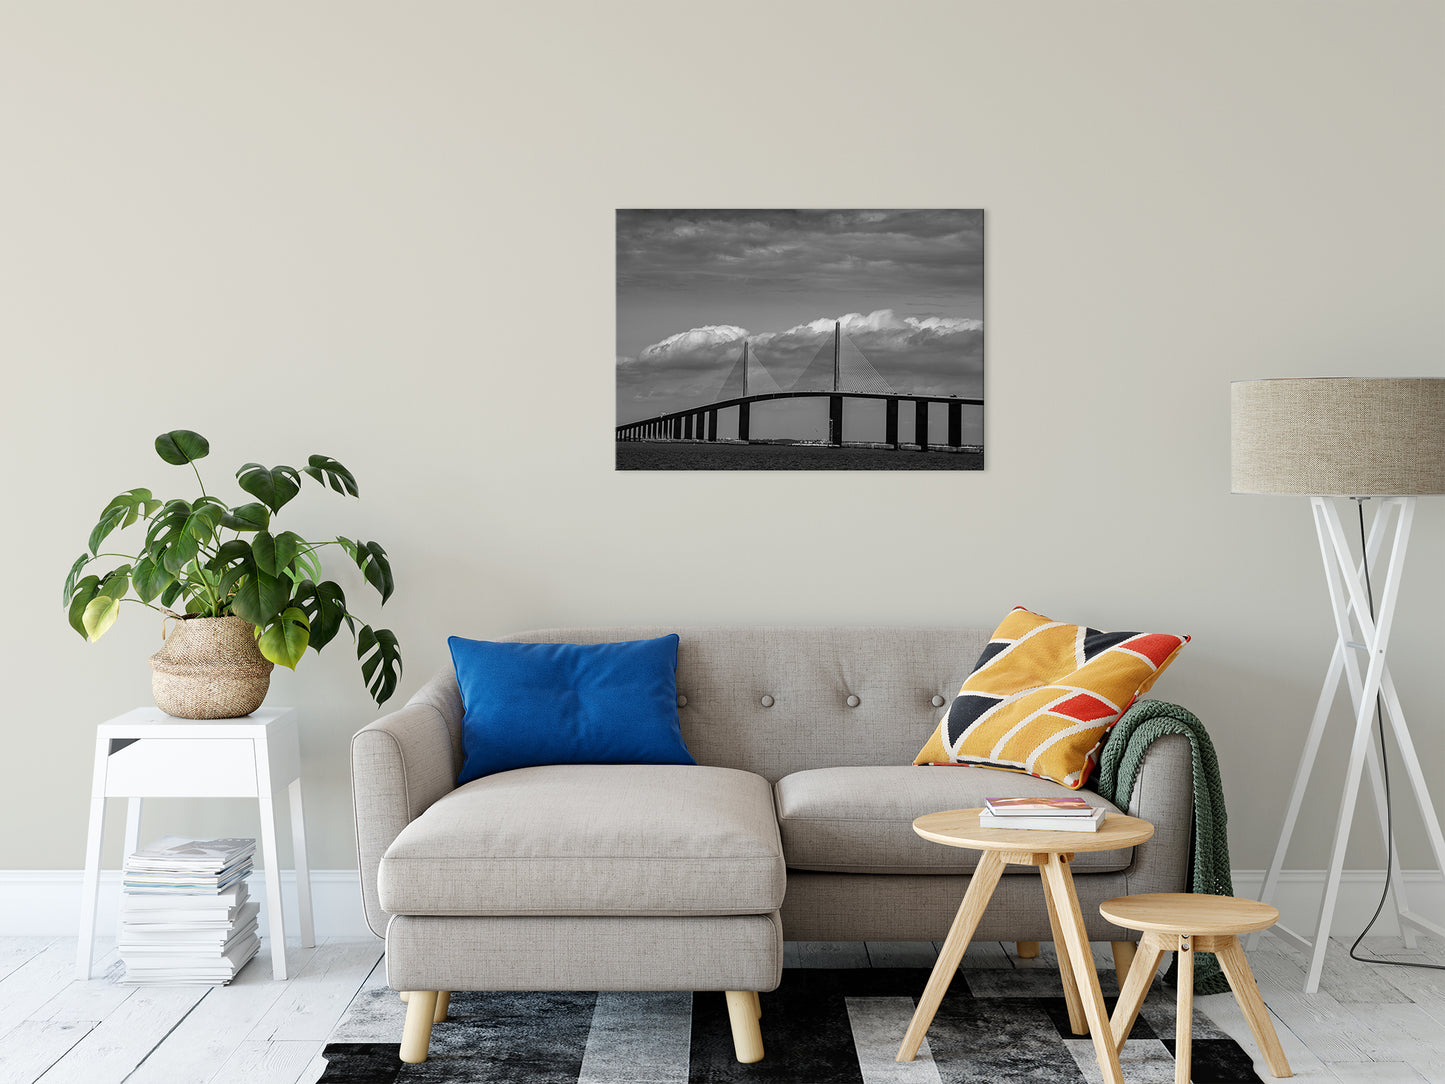 Skyway Bridge Black and White Coastal Landscape Photo Fine Art Canvas Wall Art Prints 24" x 36" - PIPAFINEART